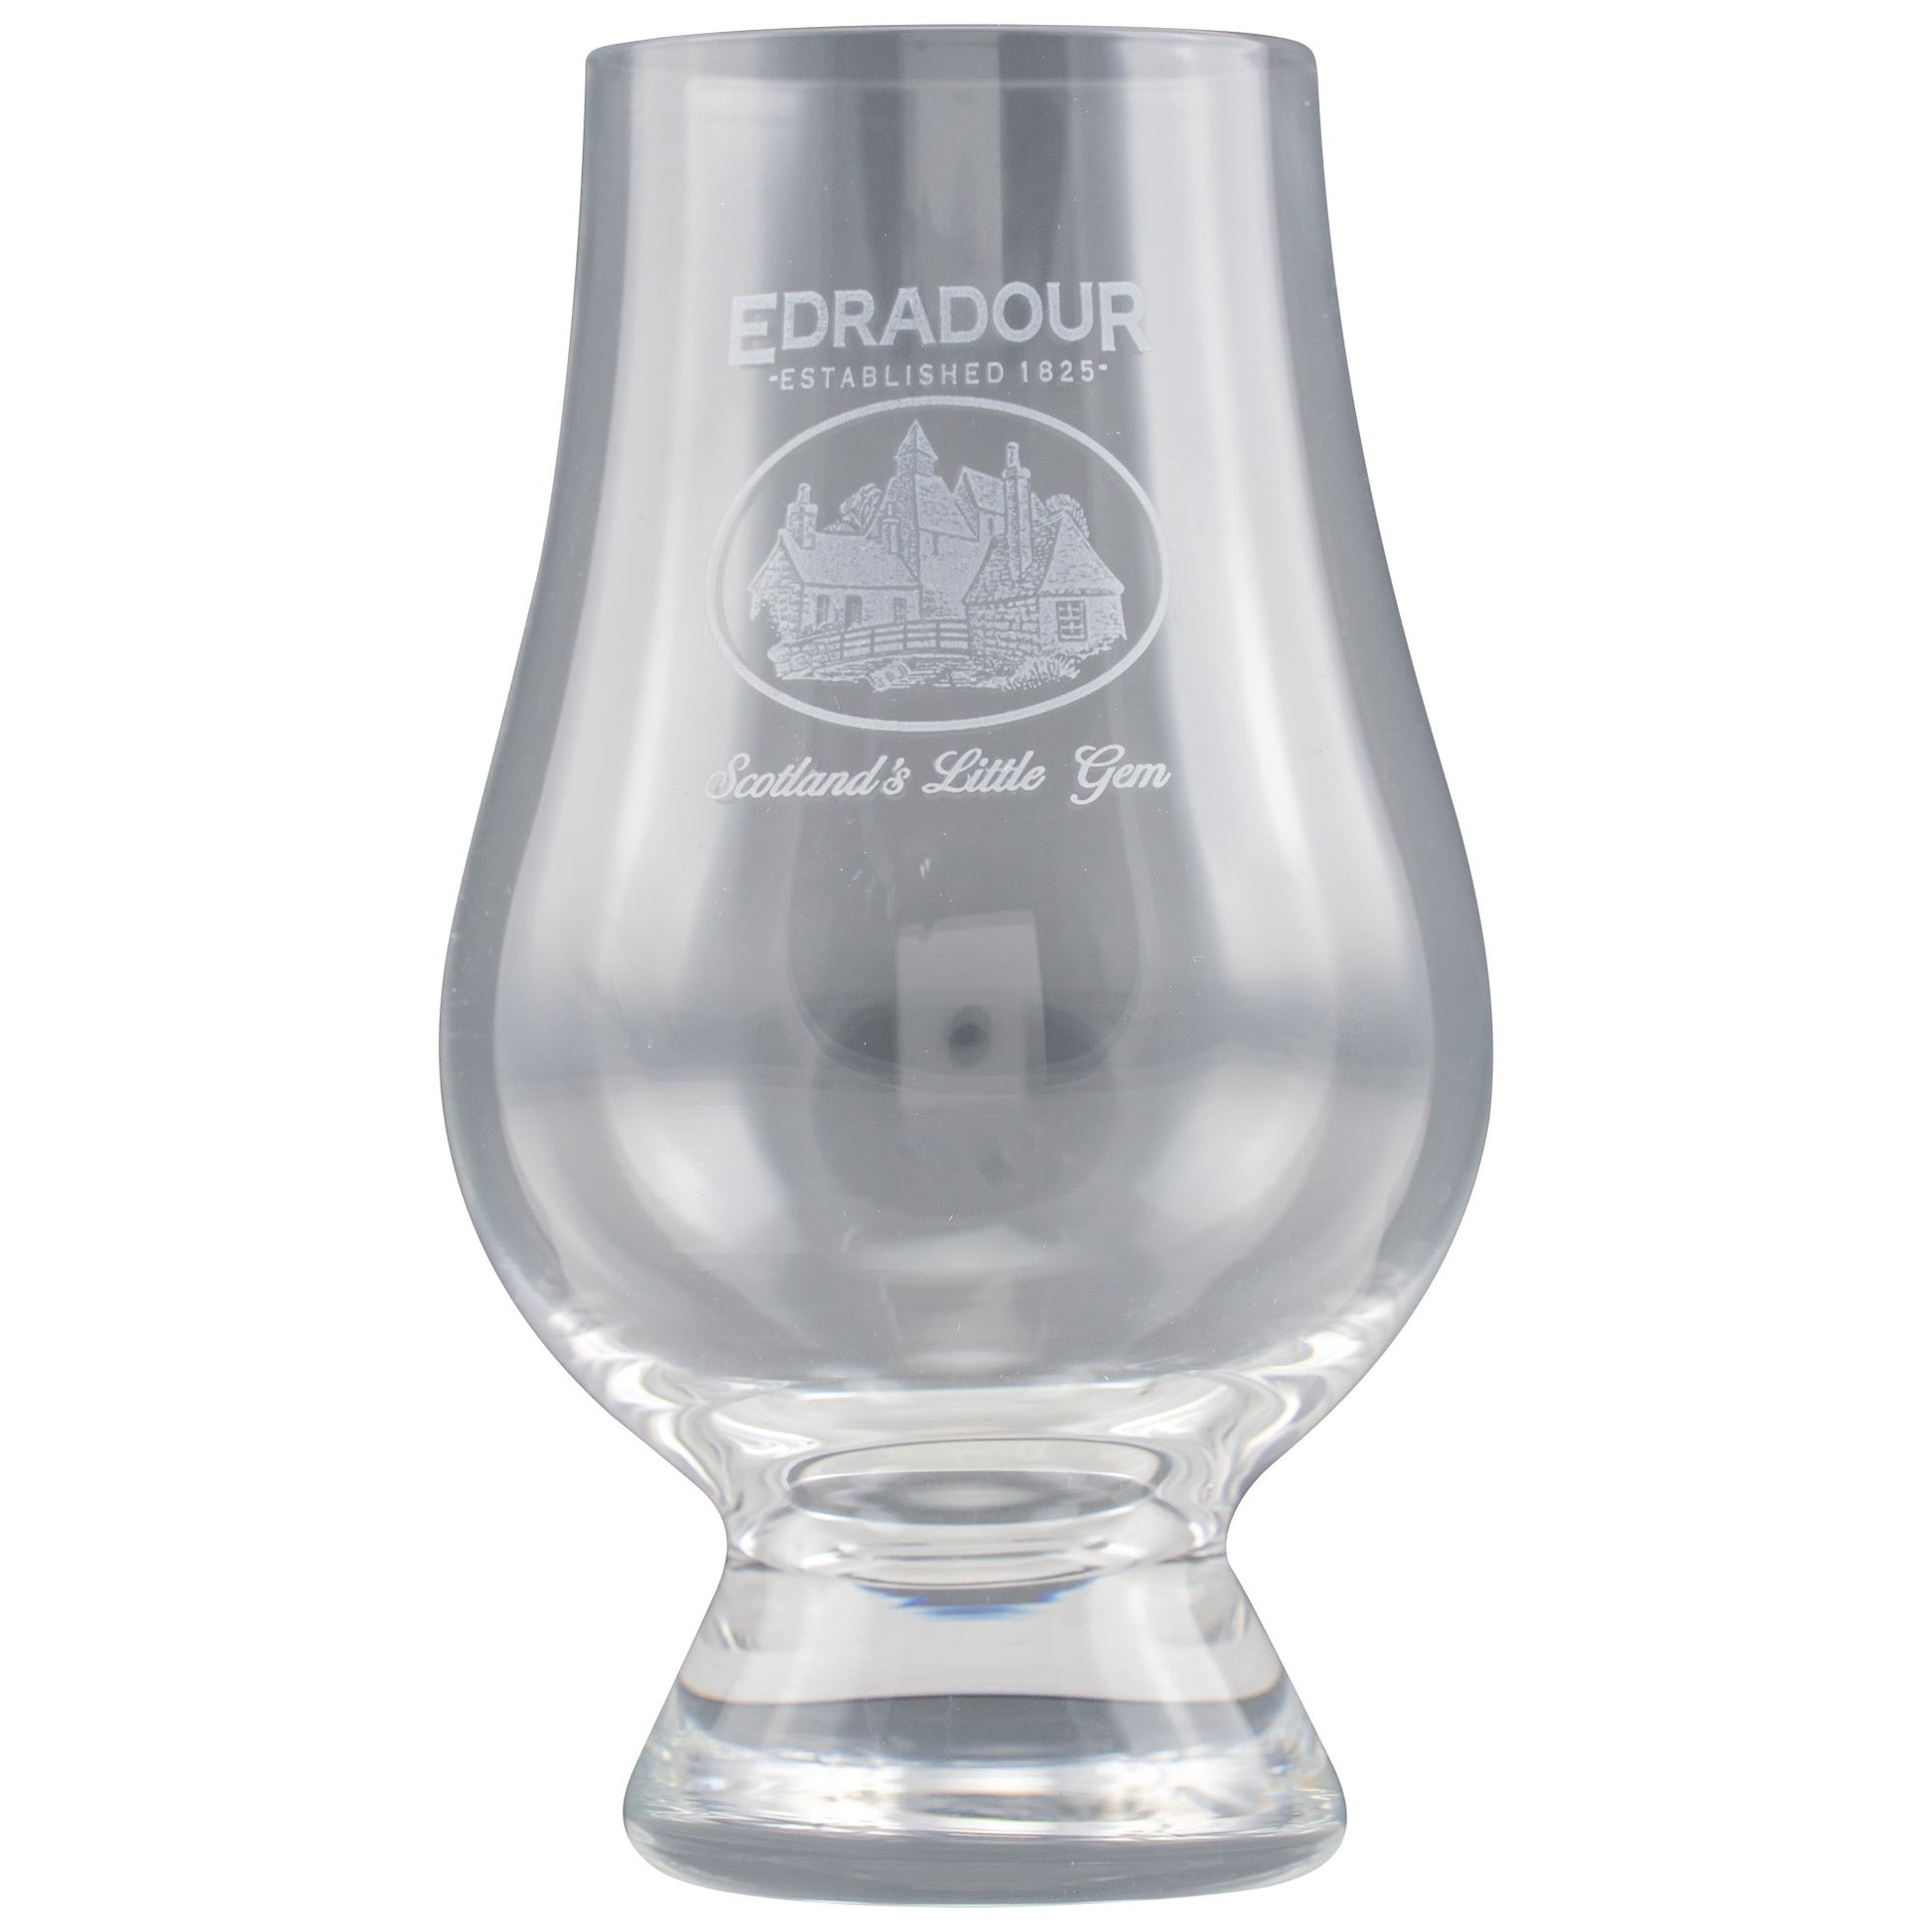 Edradour Glencairn Glas | 1 Original Tasting Glas ohne GPGET A BOTTLE